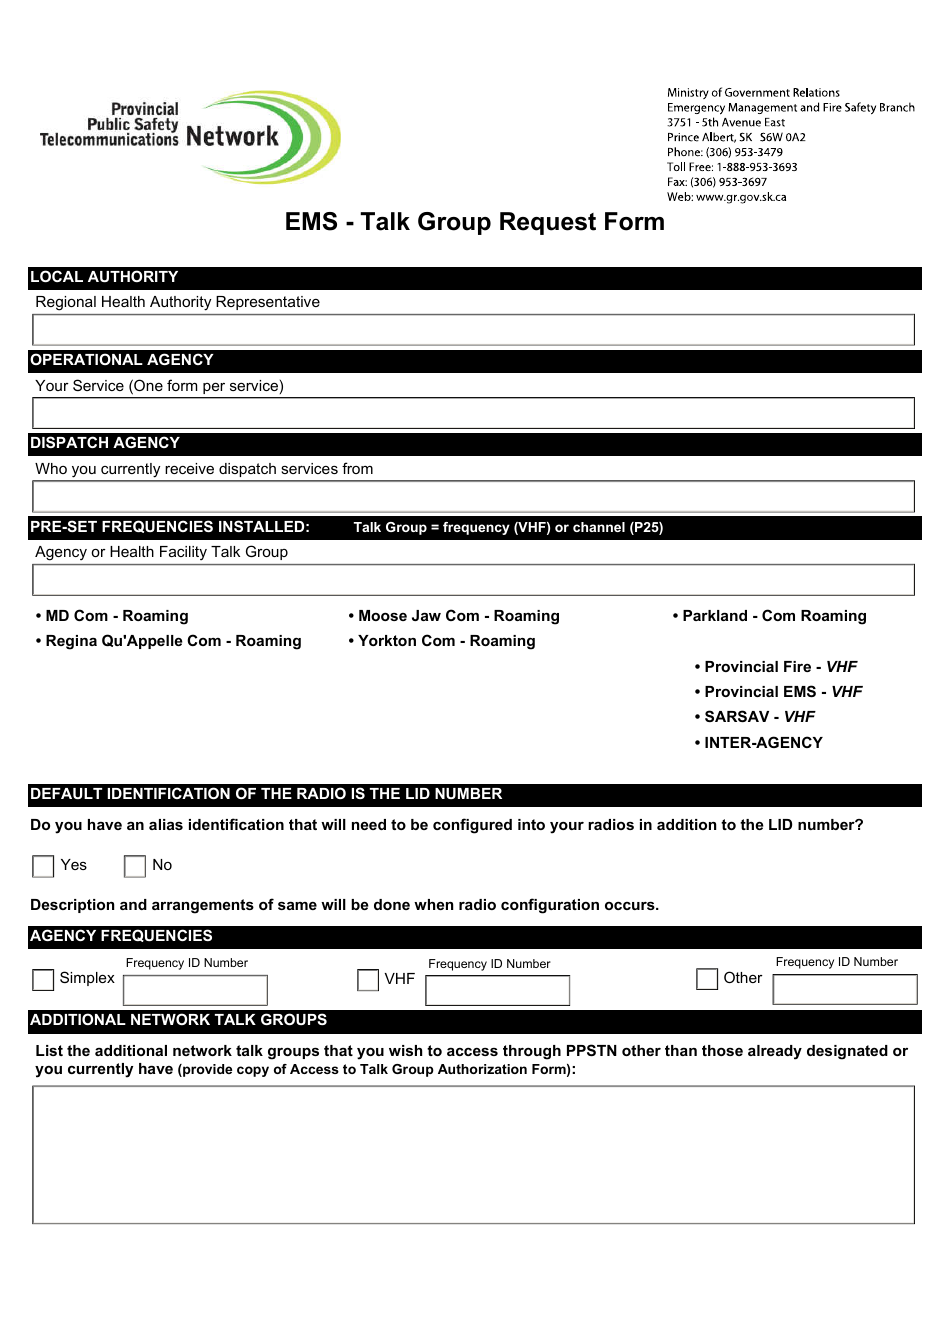 EMS - Talk Group Request Form - Saskatchewan, Canada, Page 1